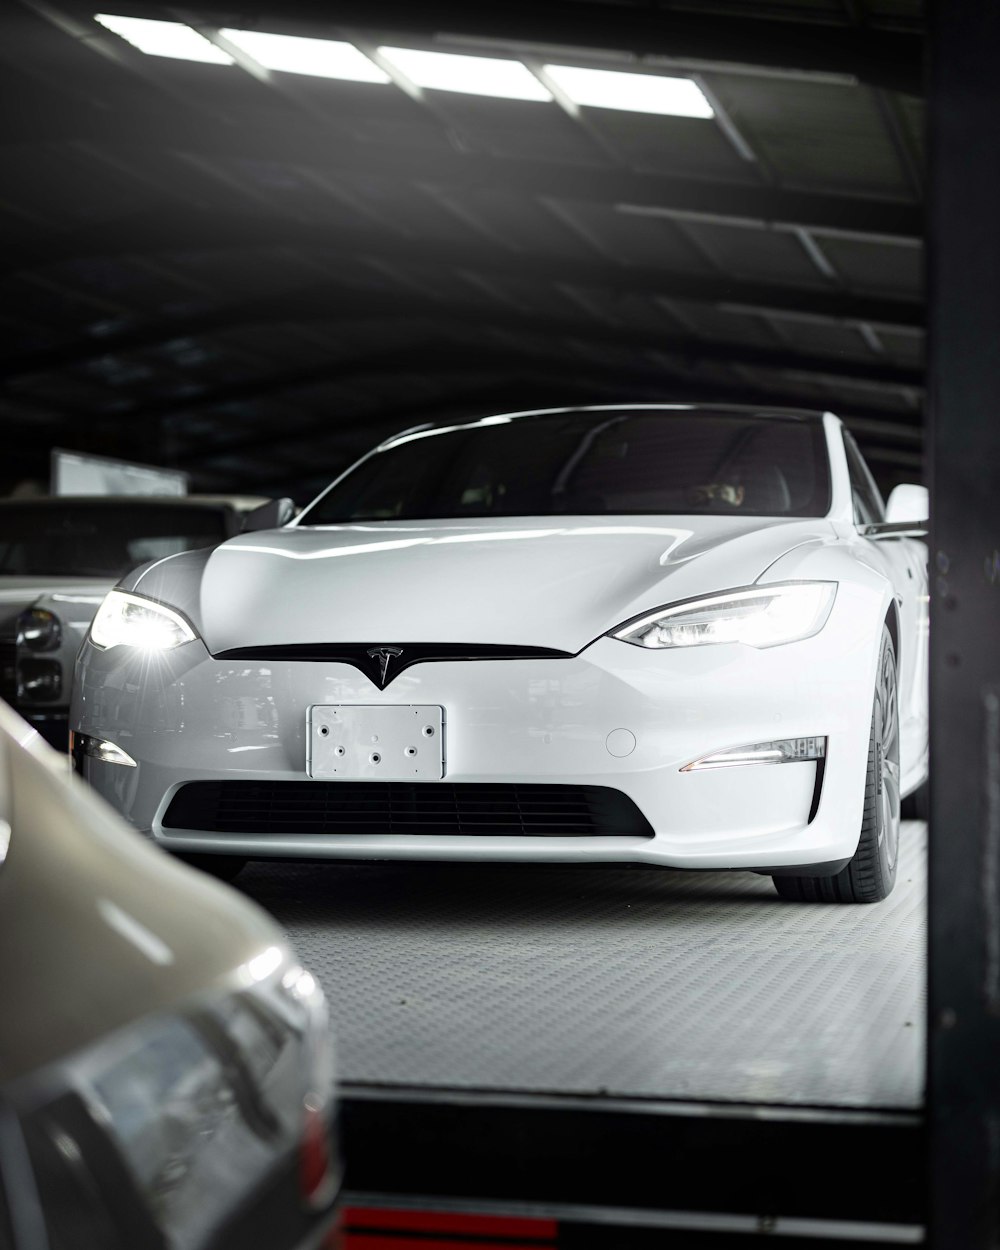 Tesla Model S Plaid Pictures | Download Free Images On Unsplash